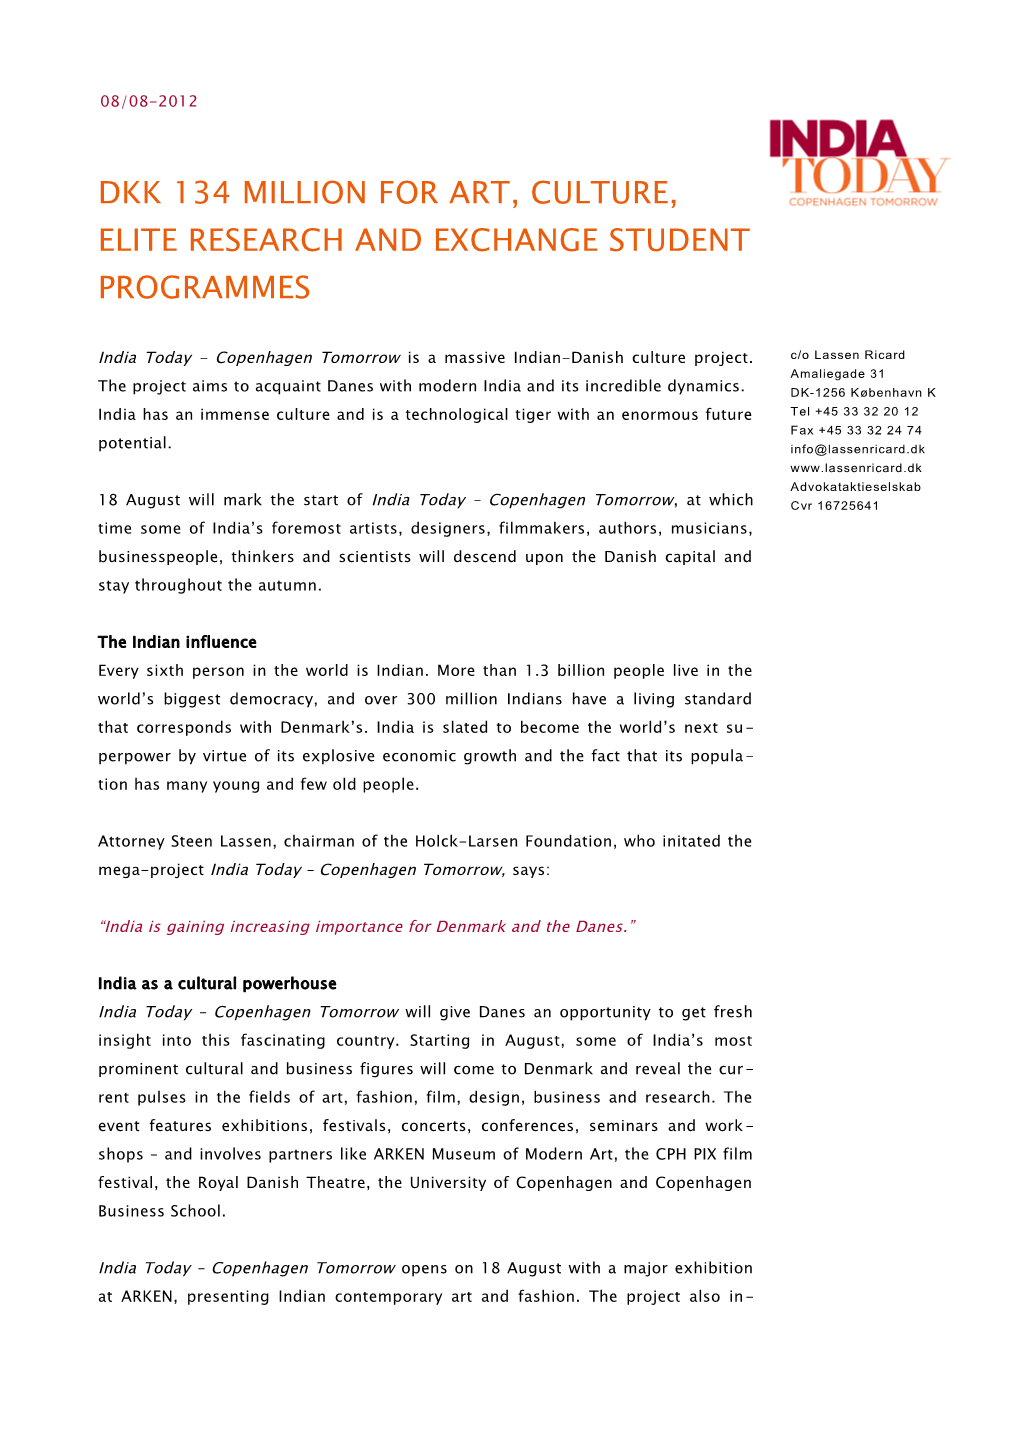 Dkk 134 Million for Art, Culture, Elite Research and Exchange Student Programmes